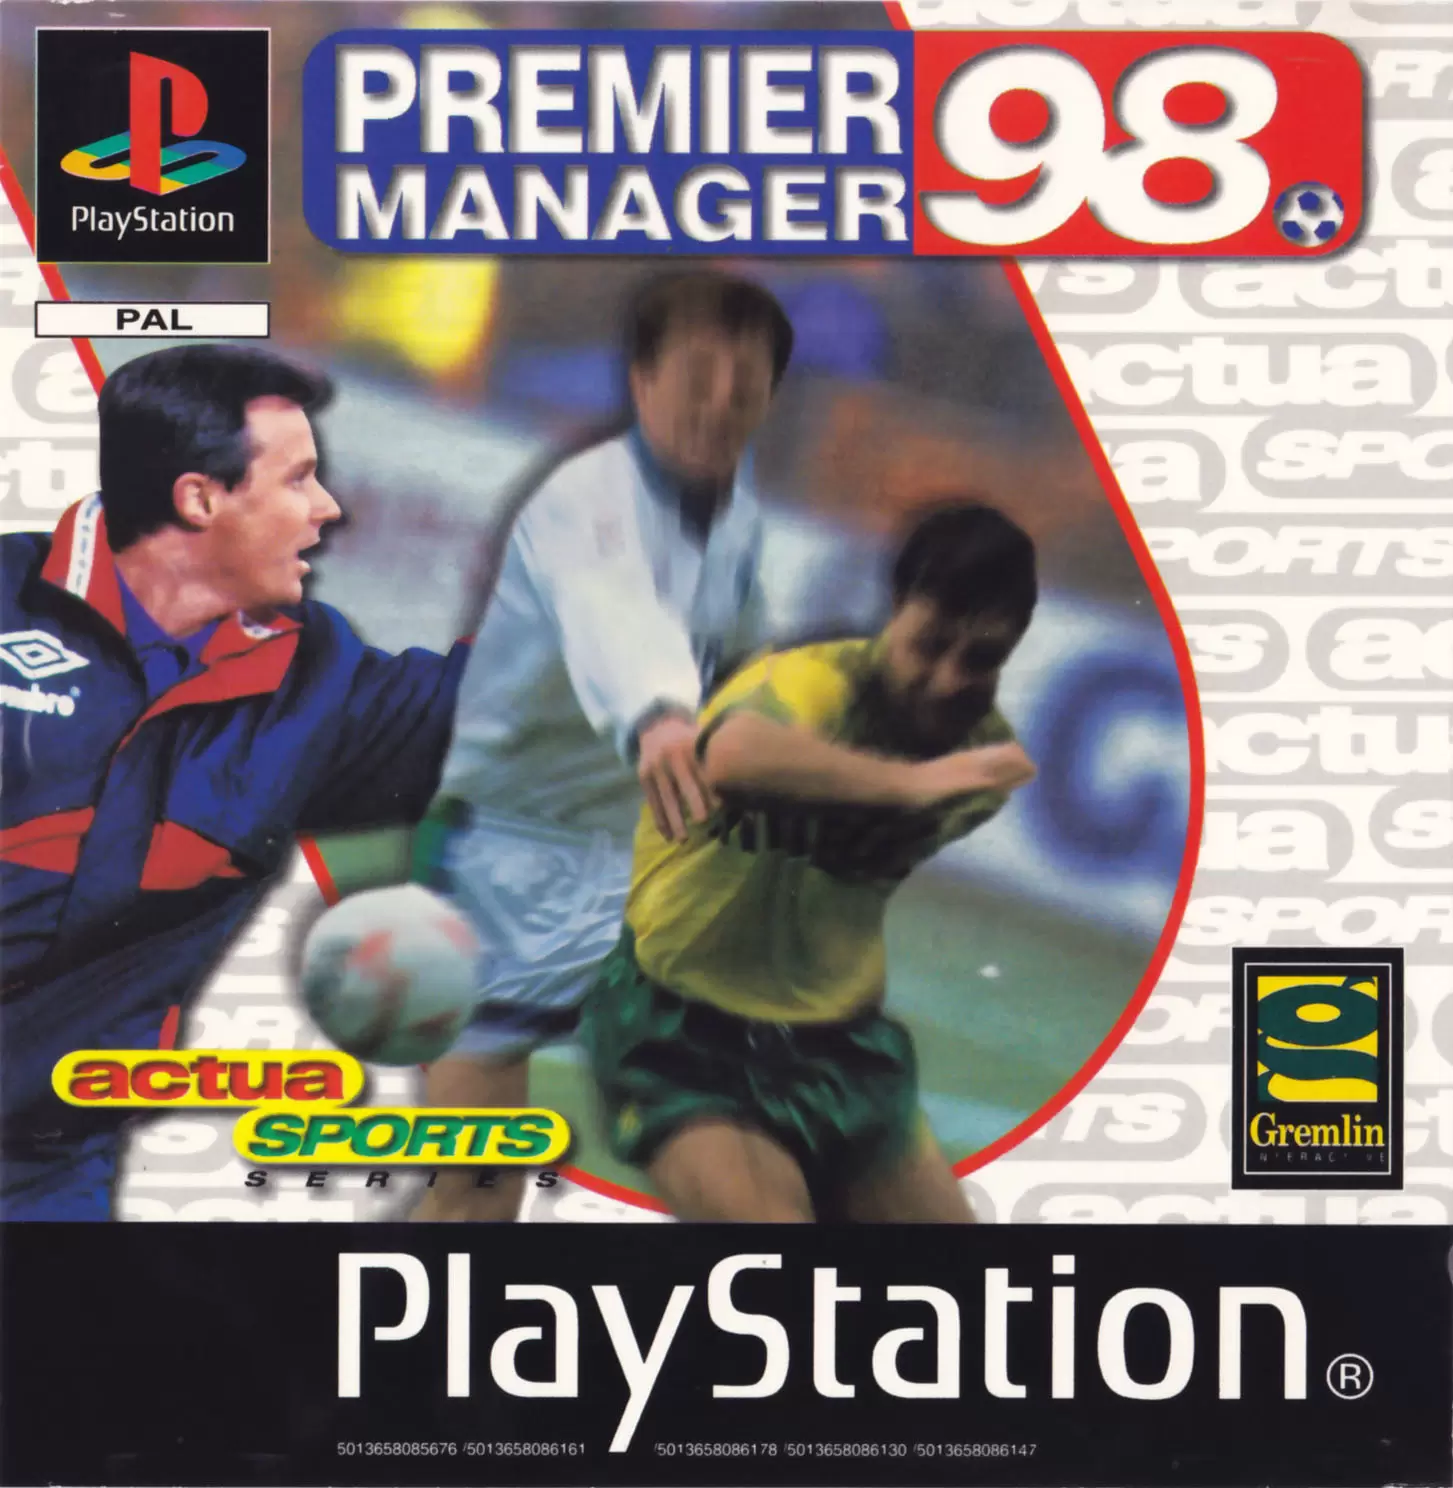 Playstation games - Premier Manager 98